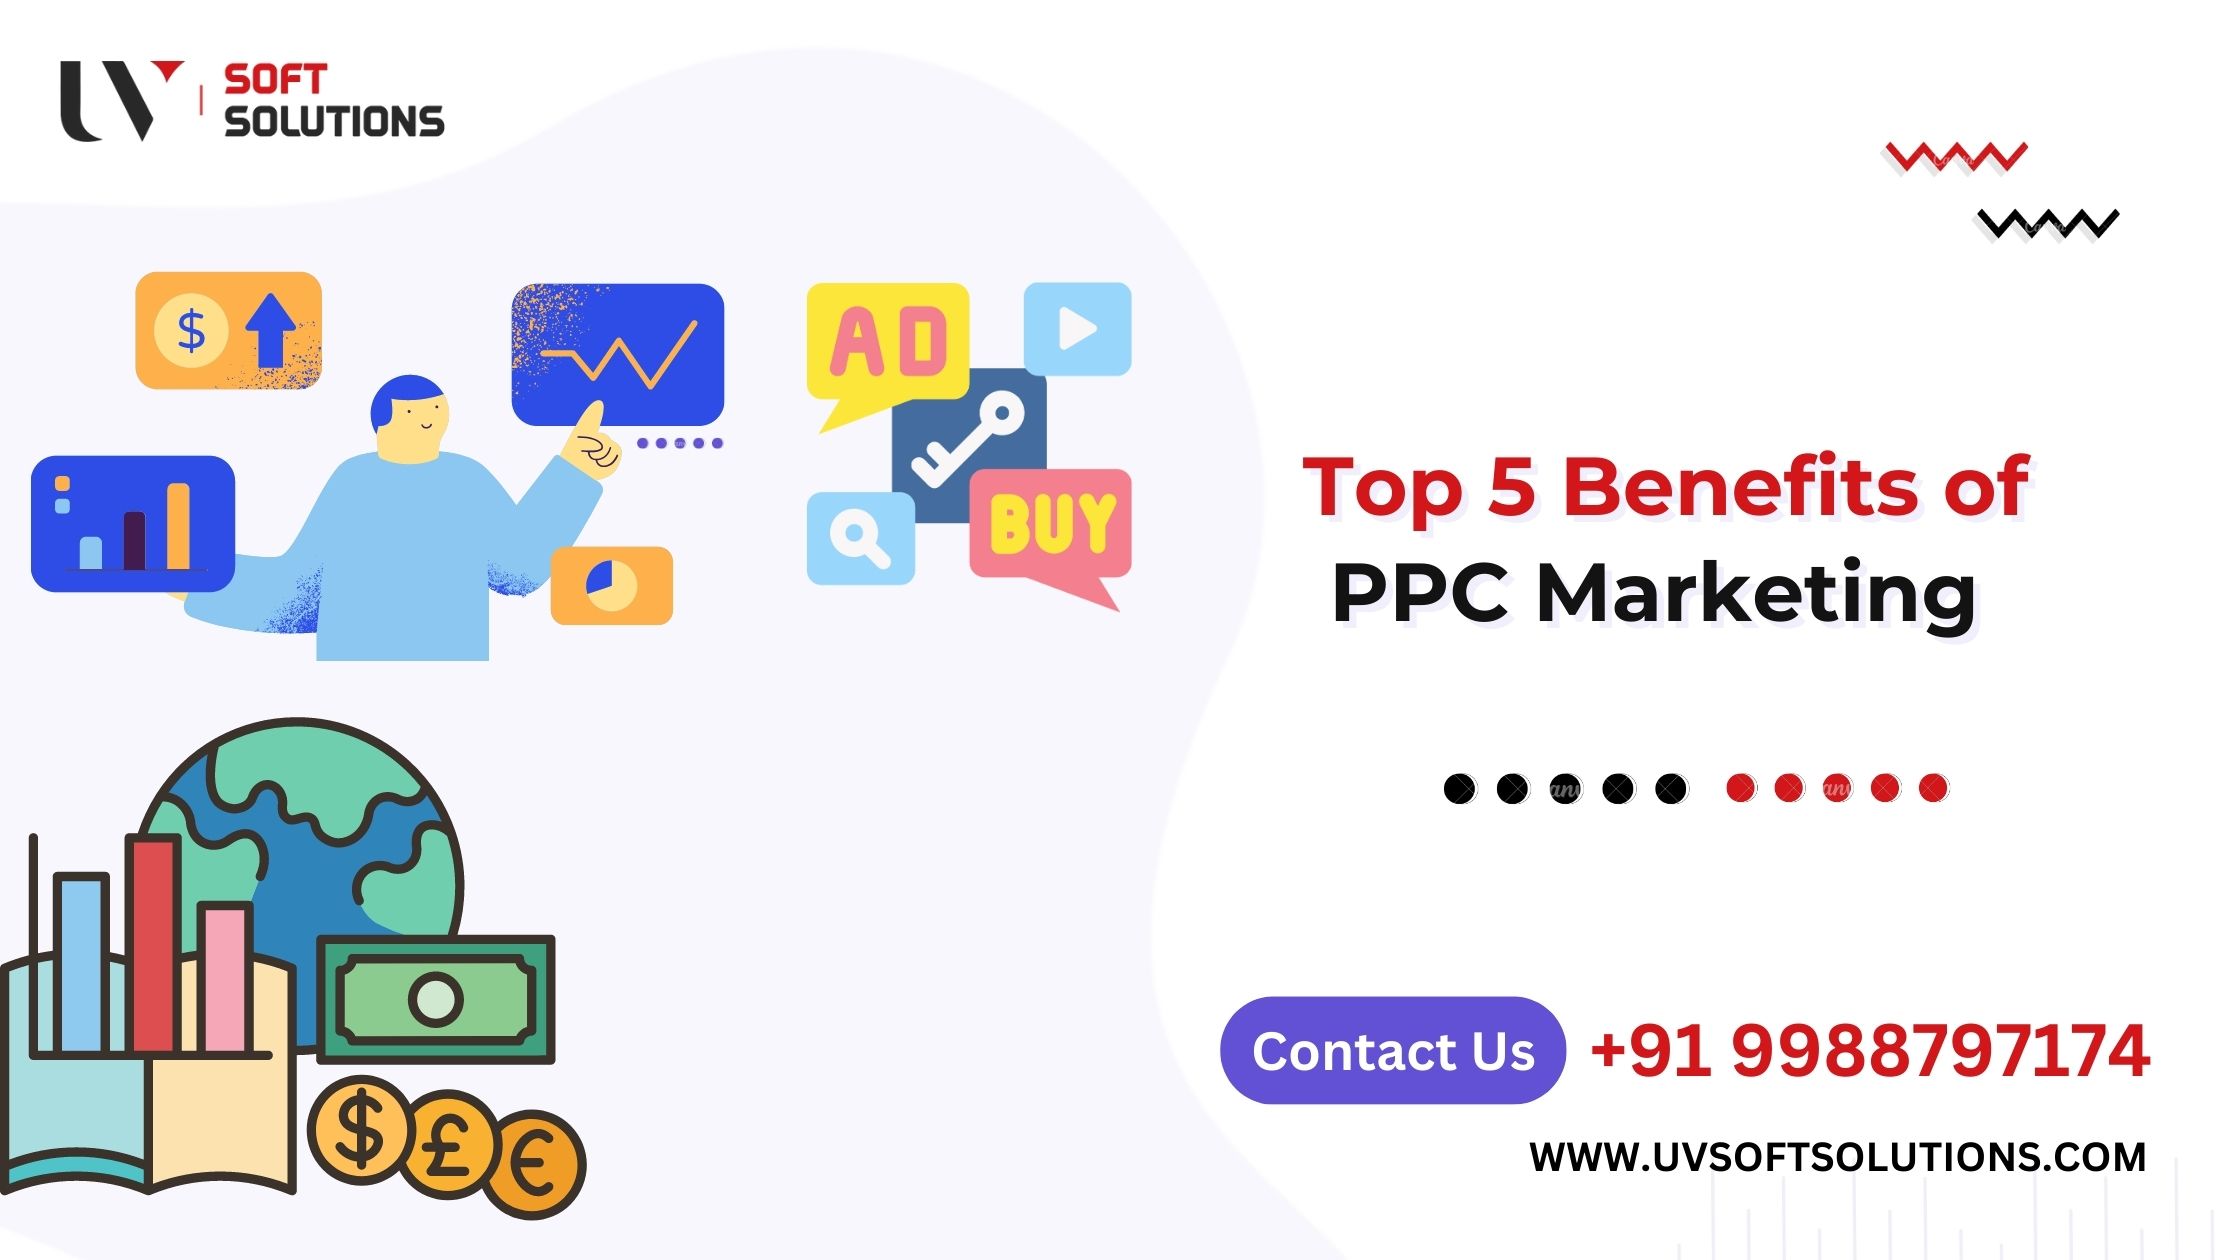 Top 5 Benefits of PPC Marketing